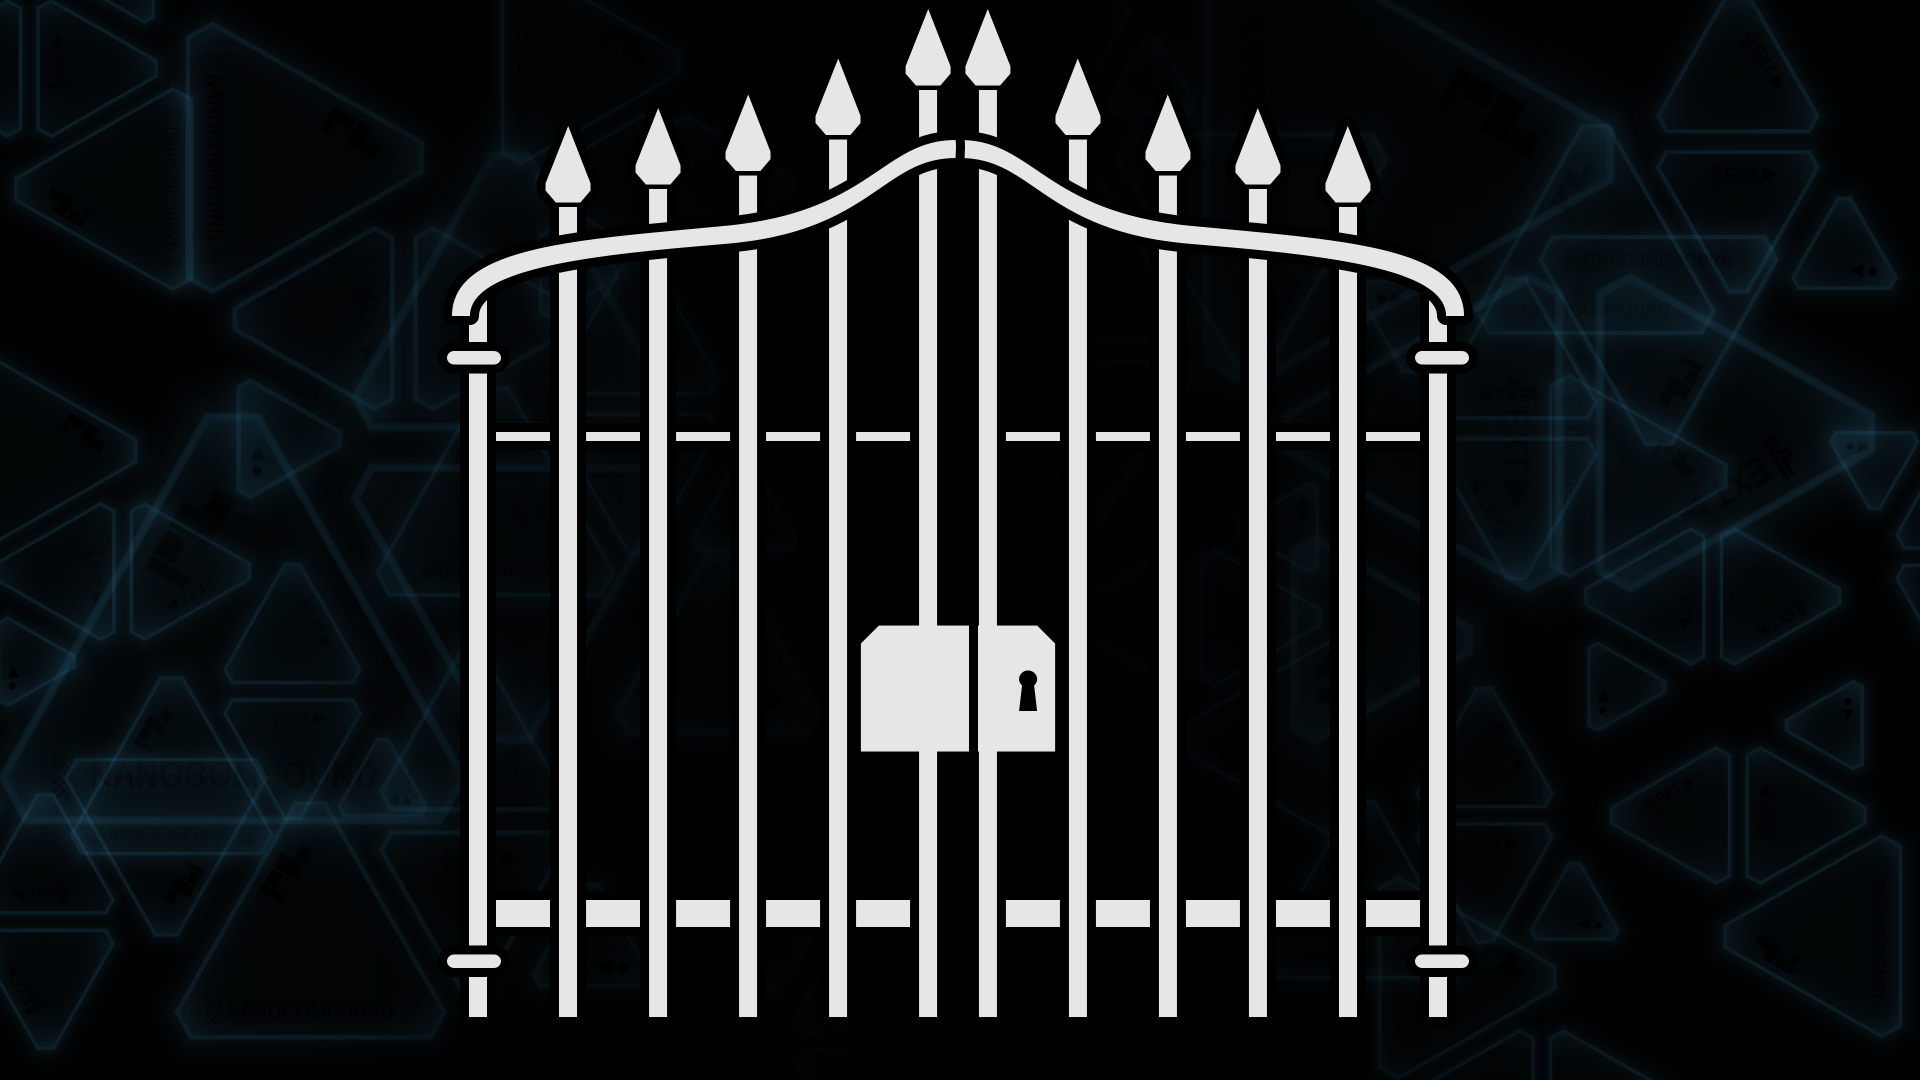 Icon for Gatekeeper